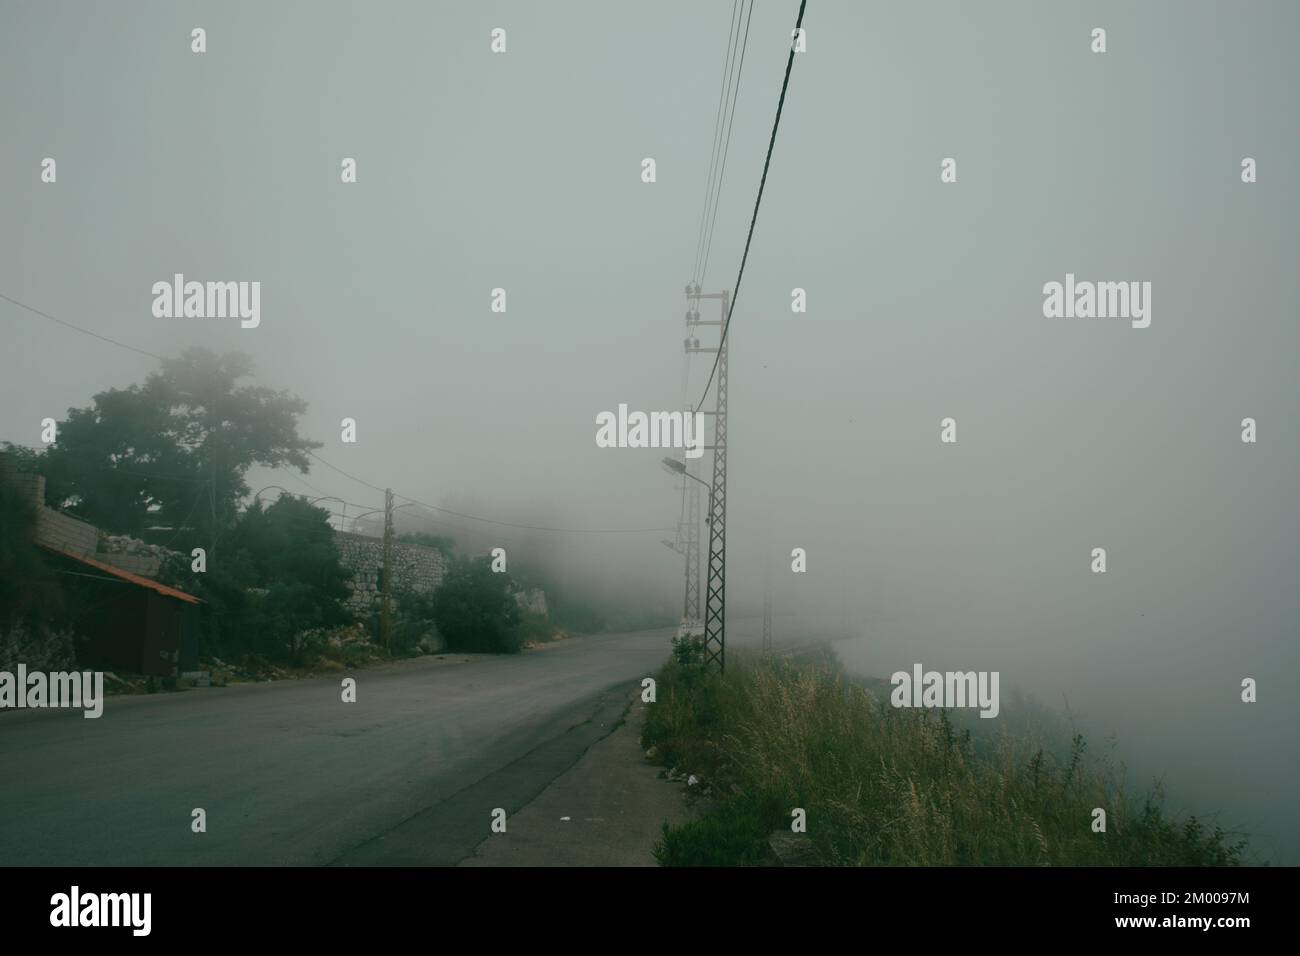 Foggy street in mount Lebanon Stock Photo